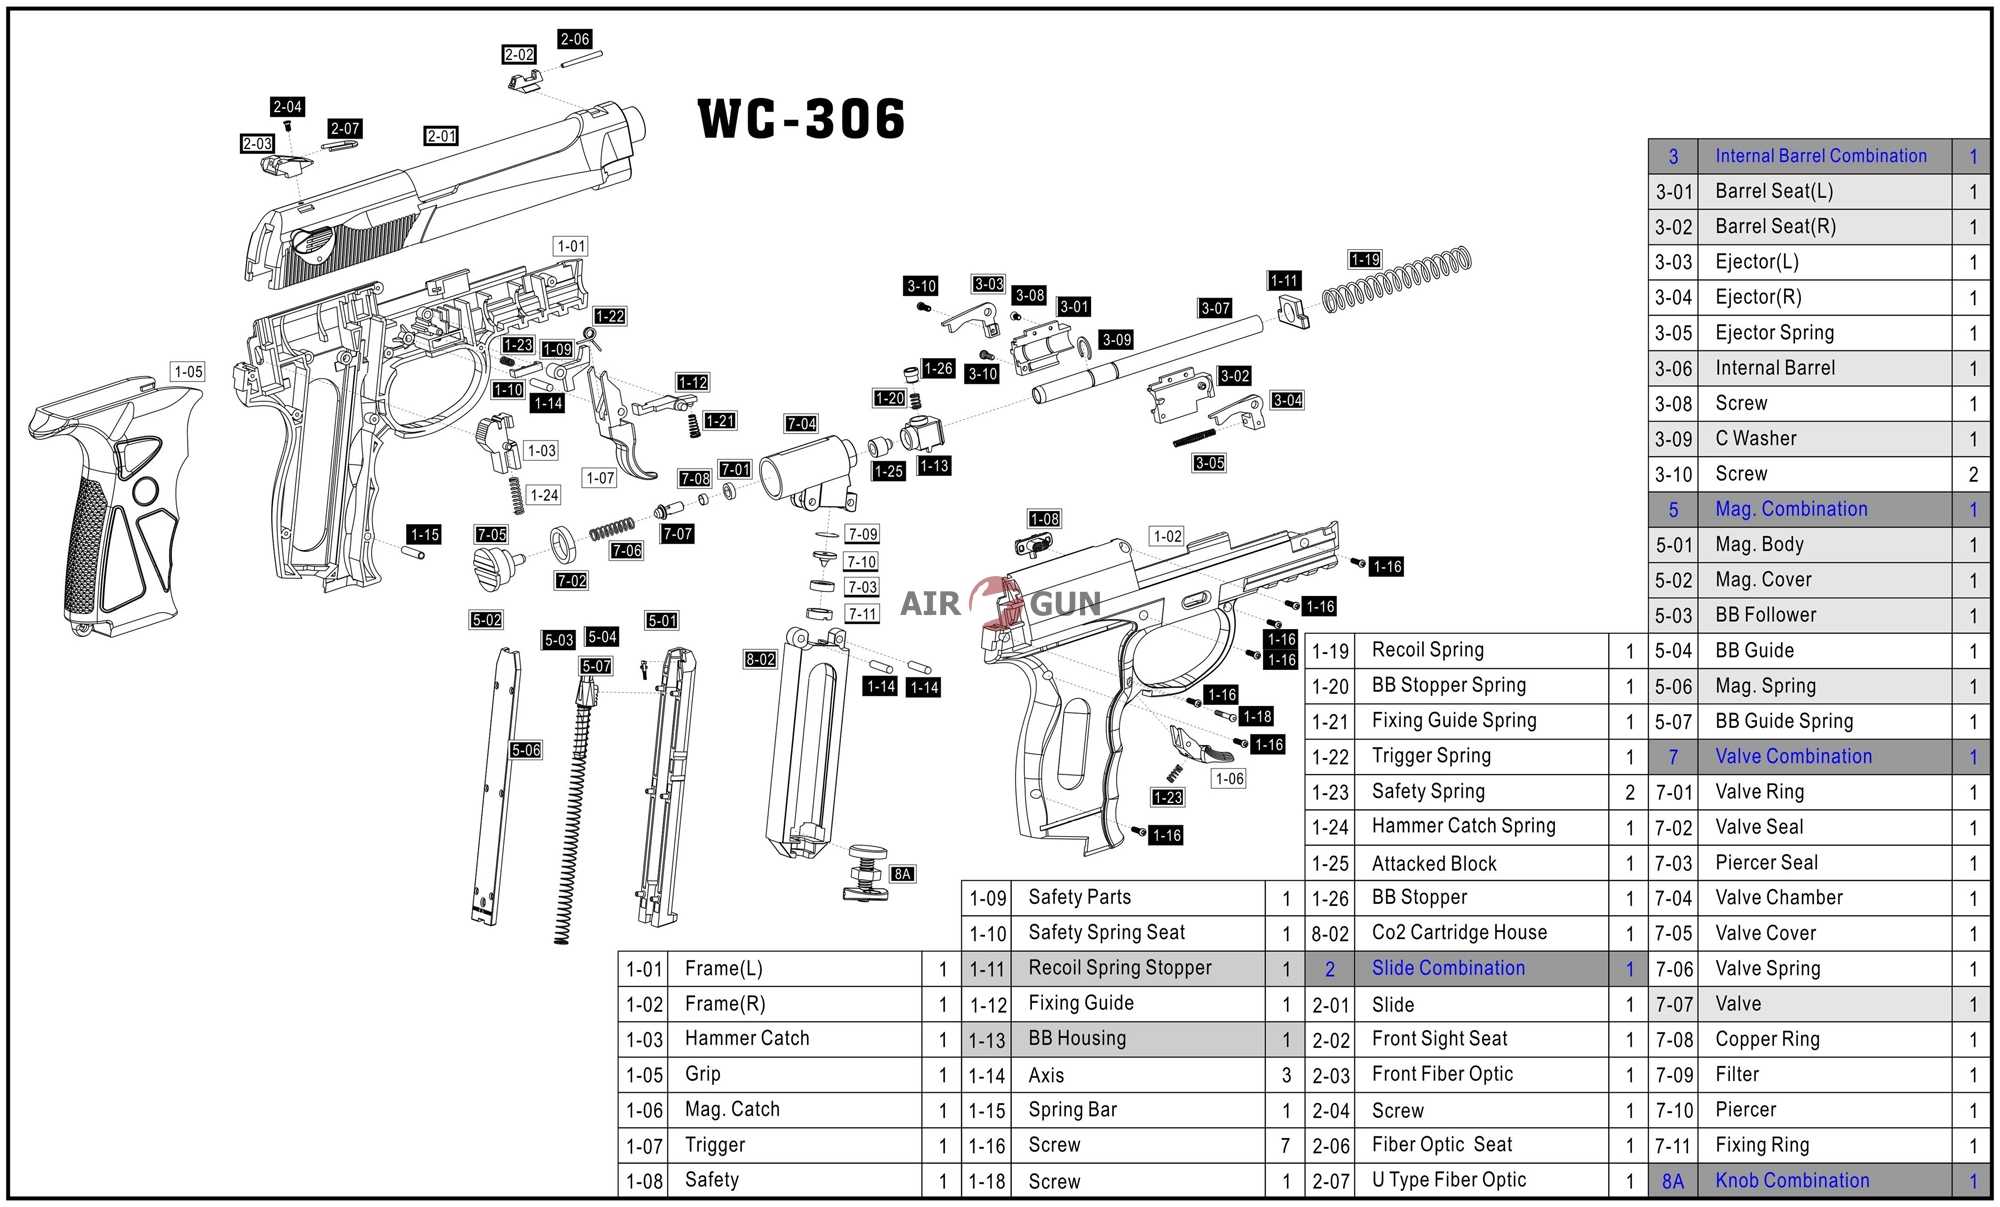 Пистолет пневм. BORNER Sport 306M, кал. 4,5 мм (8.3041)